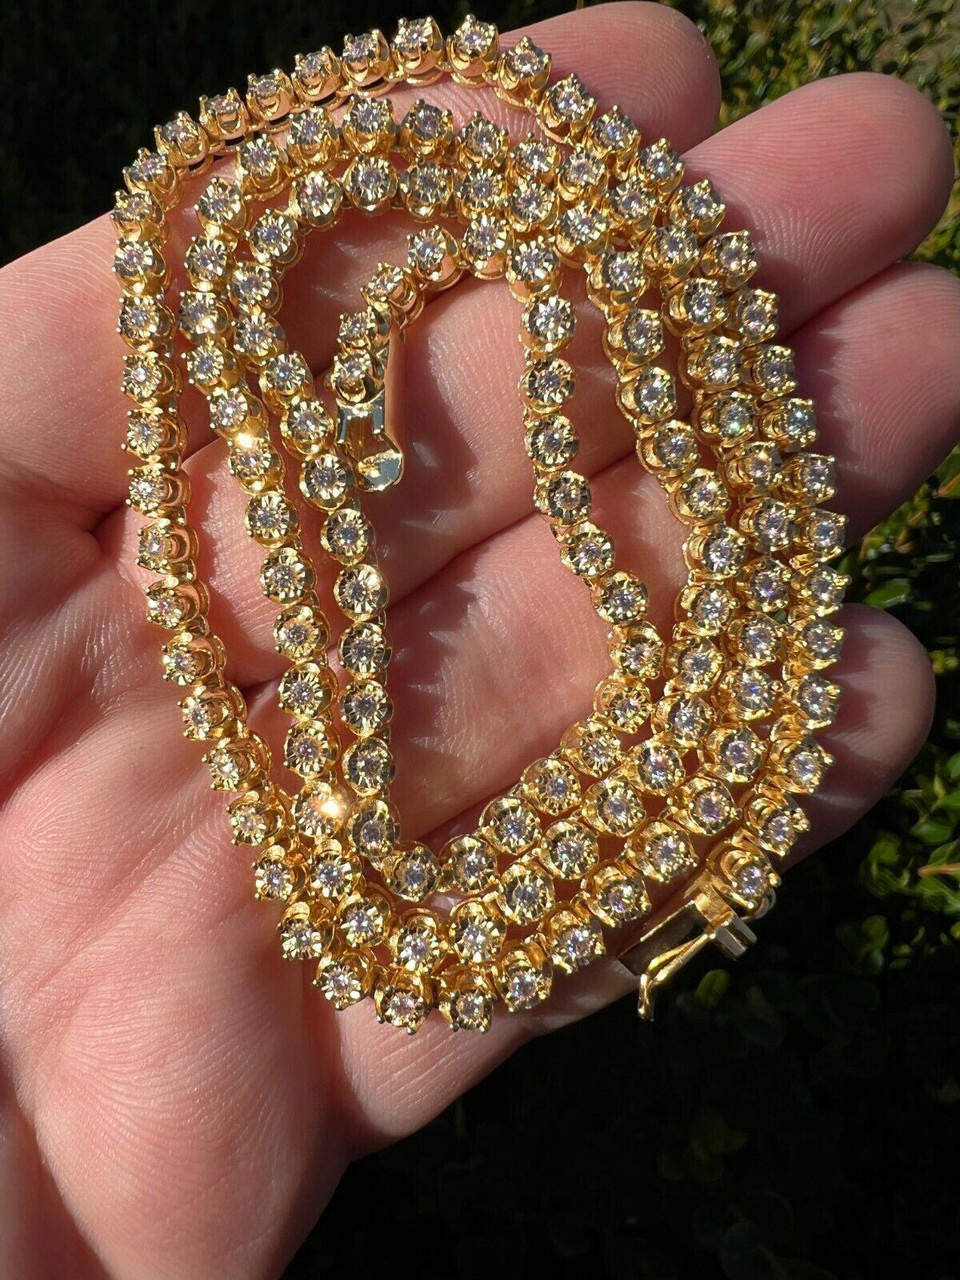 3mm 14k Gold Moissanite Diamond Tennis Chain illusion Setting Necklace